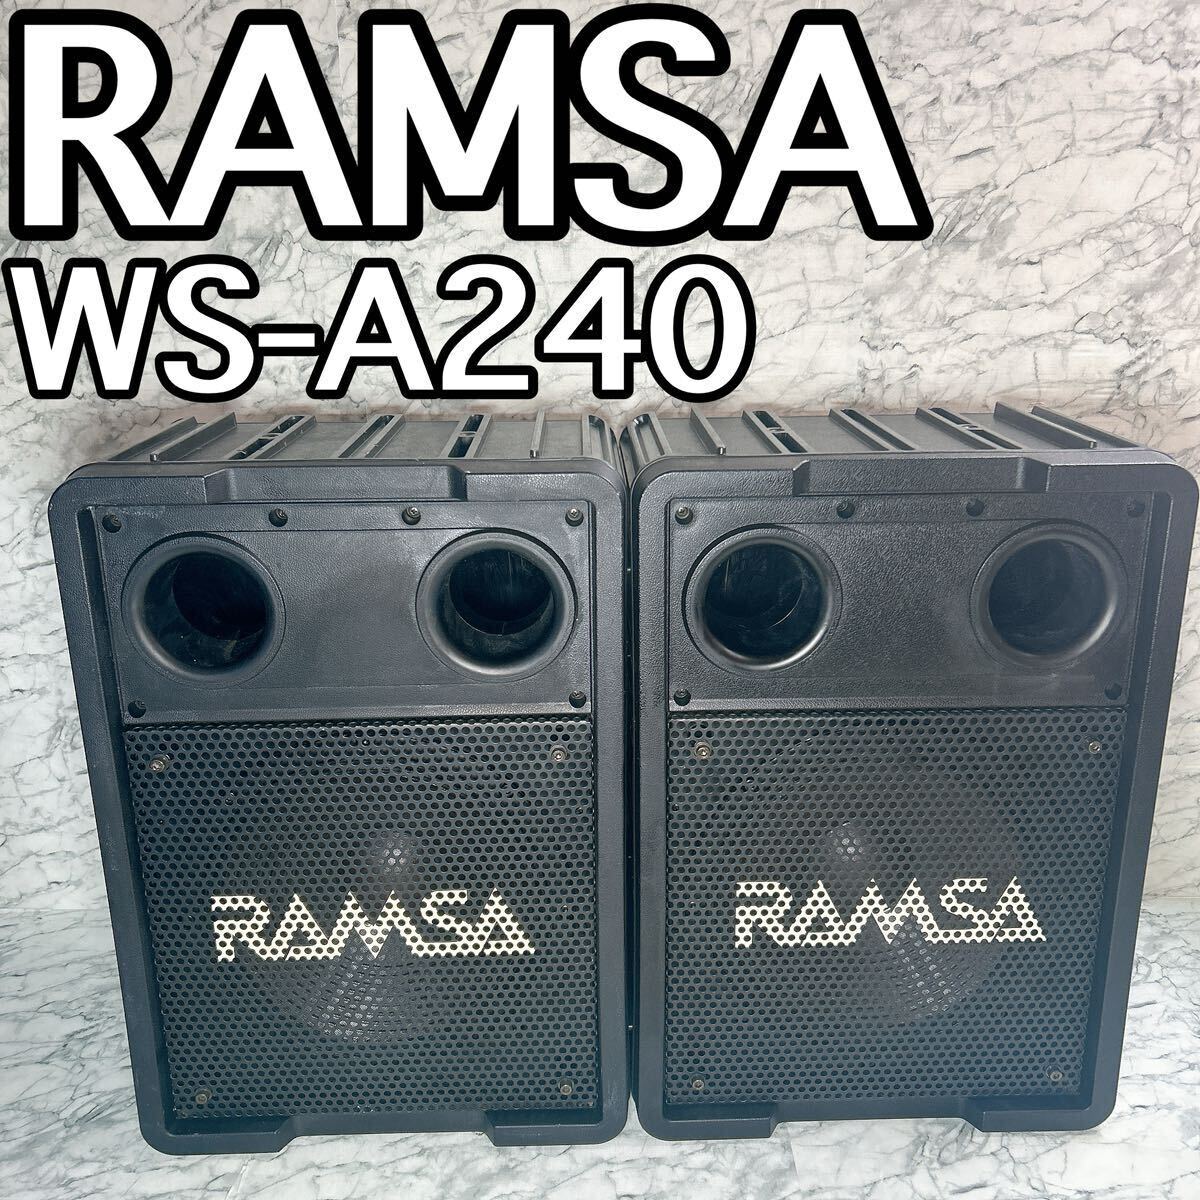 National сабвуфер RAMSA WS-A240 пара Ram sa